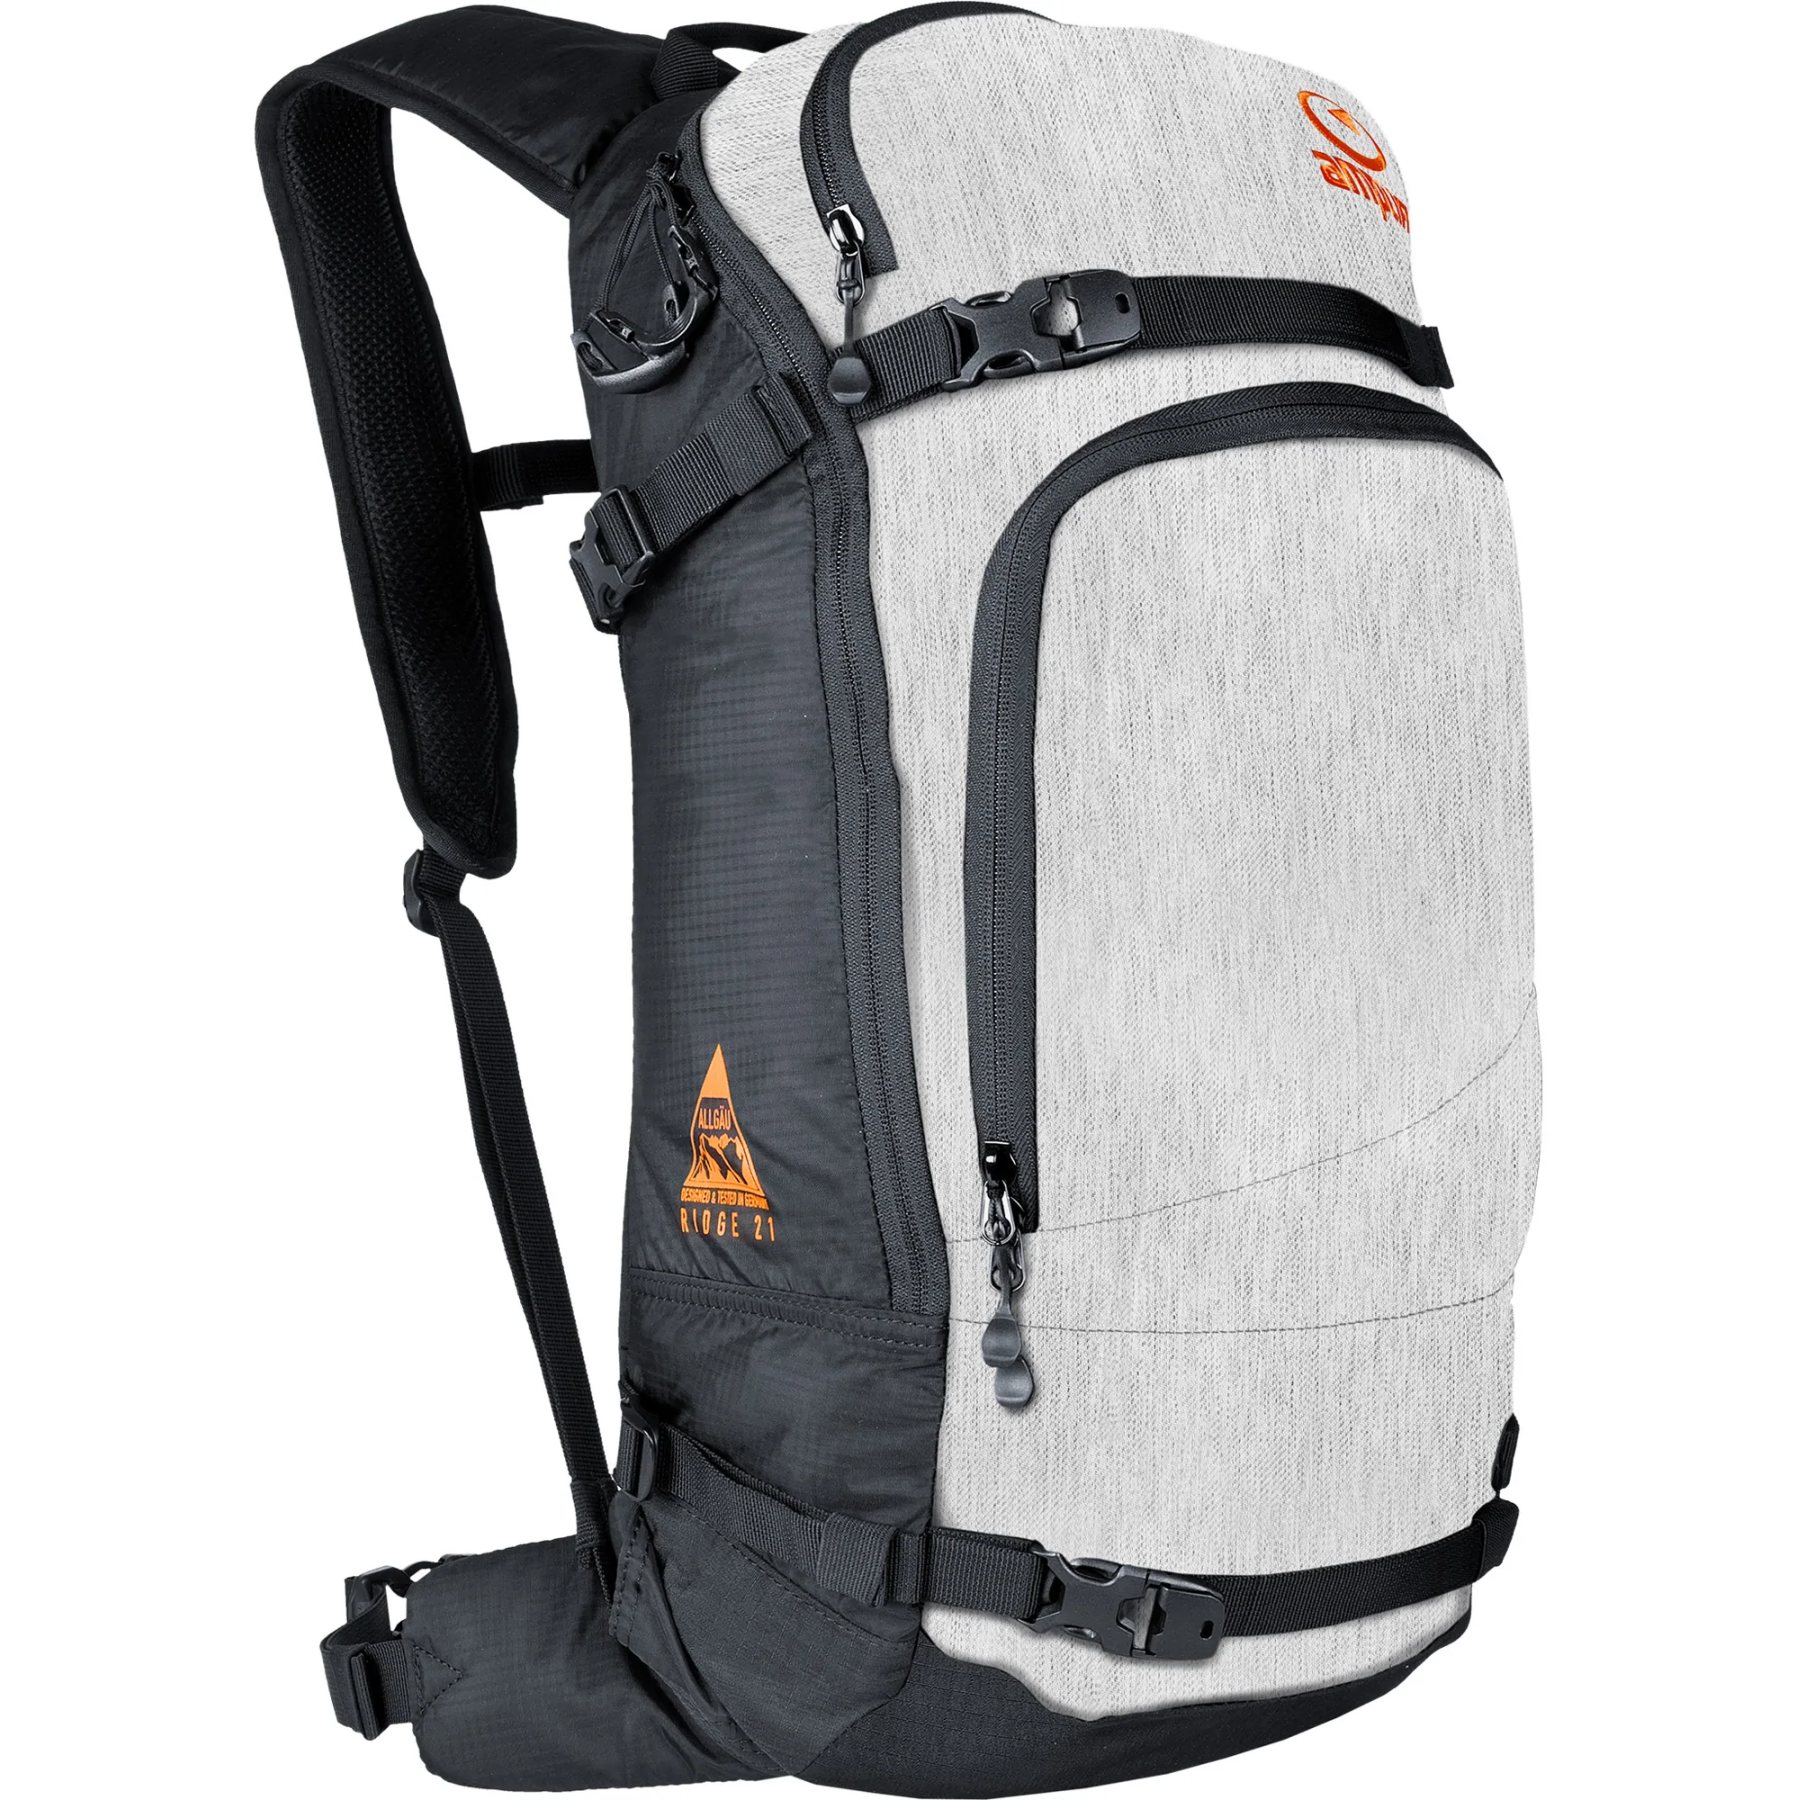 Productfoto van Amplifi RDG21 Backpack - 21L - outrun